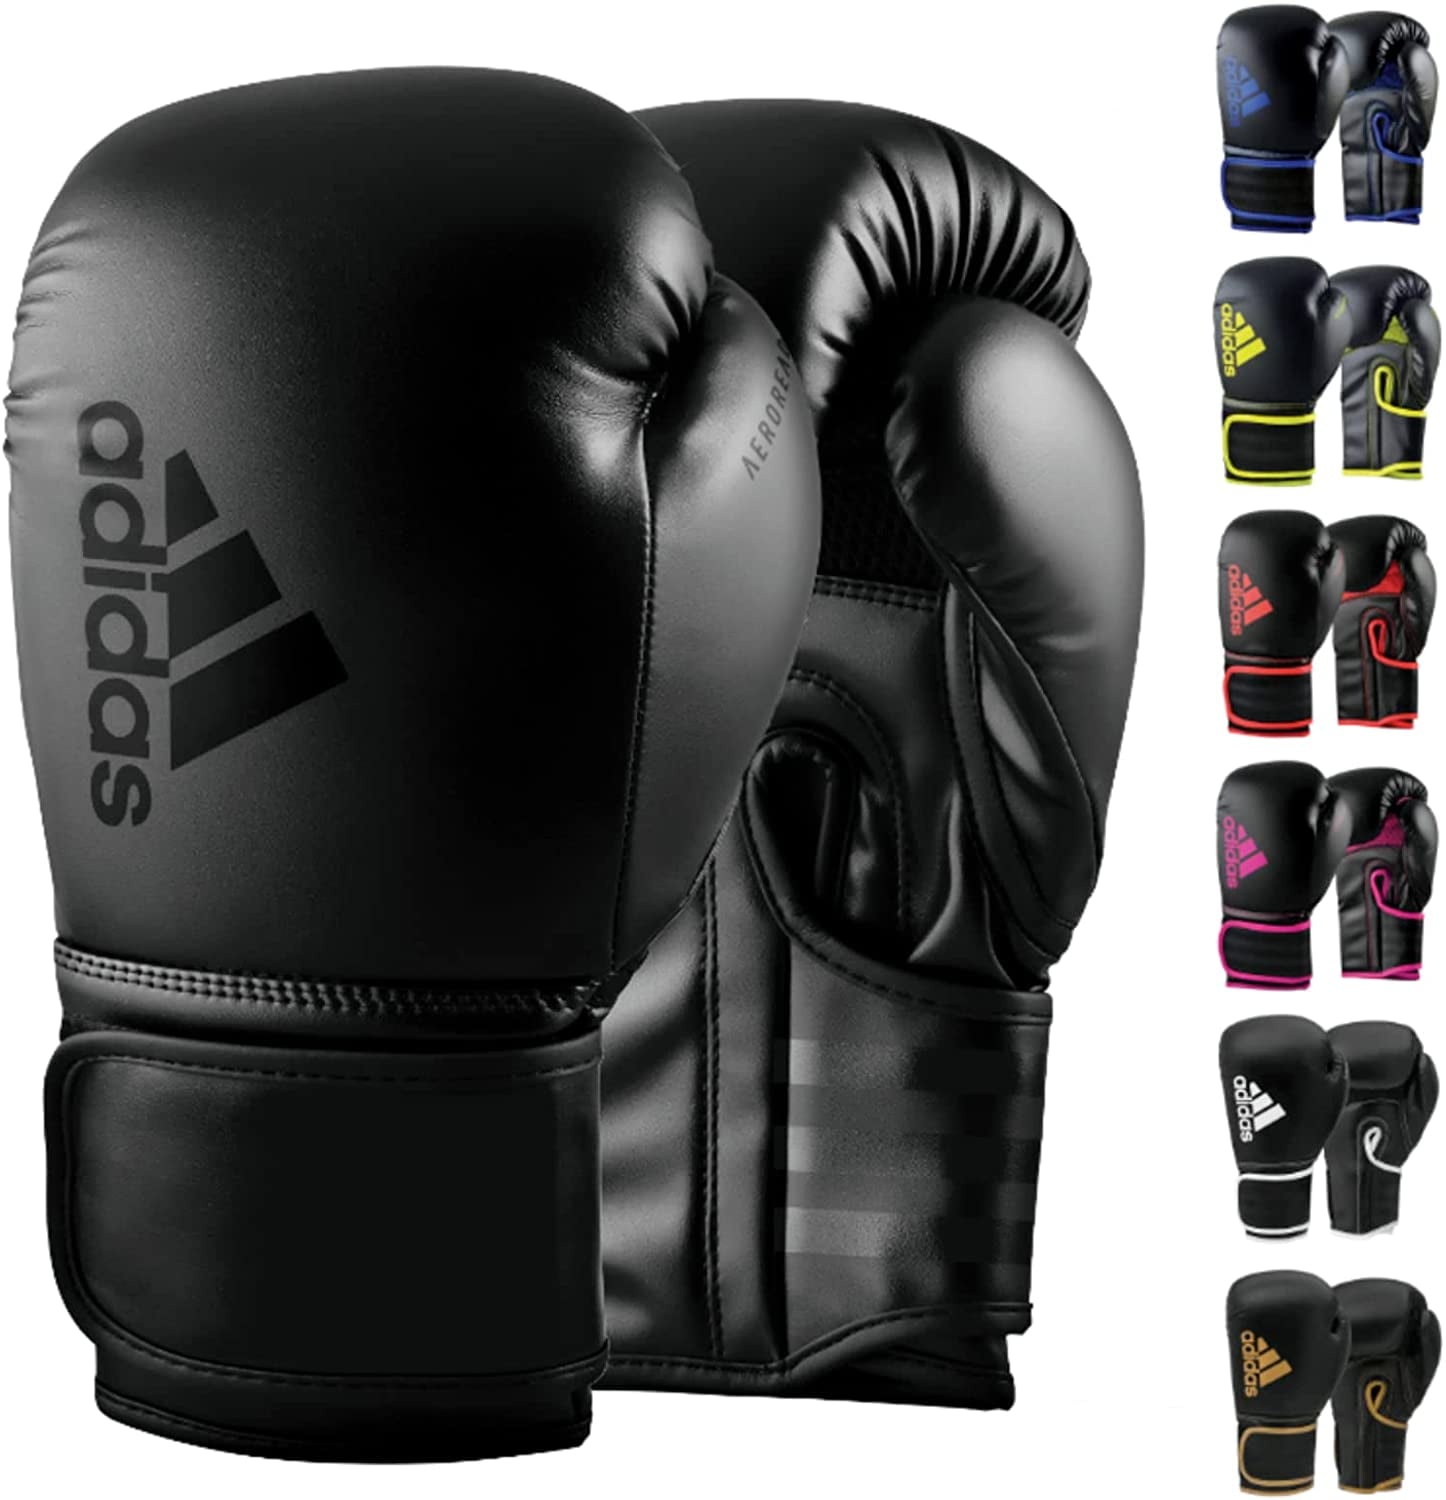 for and Gloves - pair Kids set Training Adidas Gloves Men, Hybrid Kickboxing Boxing 80 Sparring - Women for Gloves,